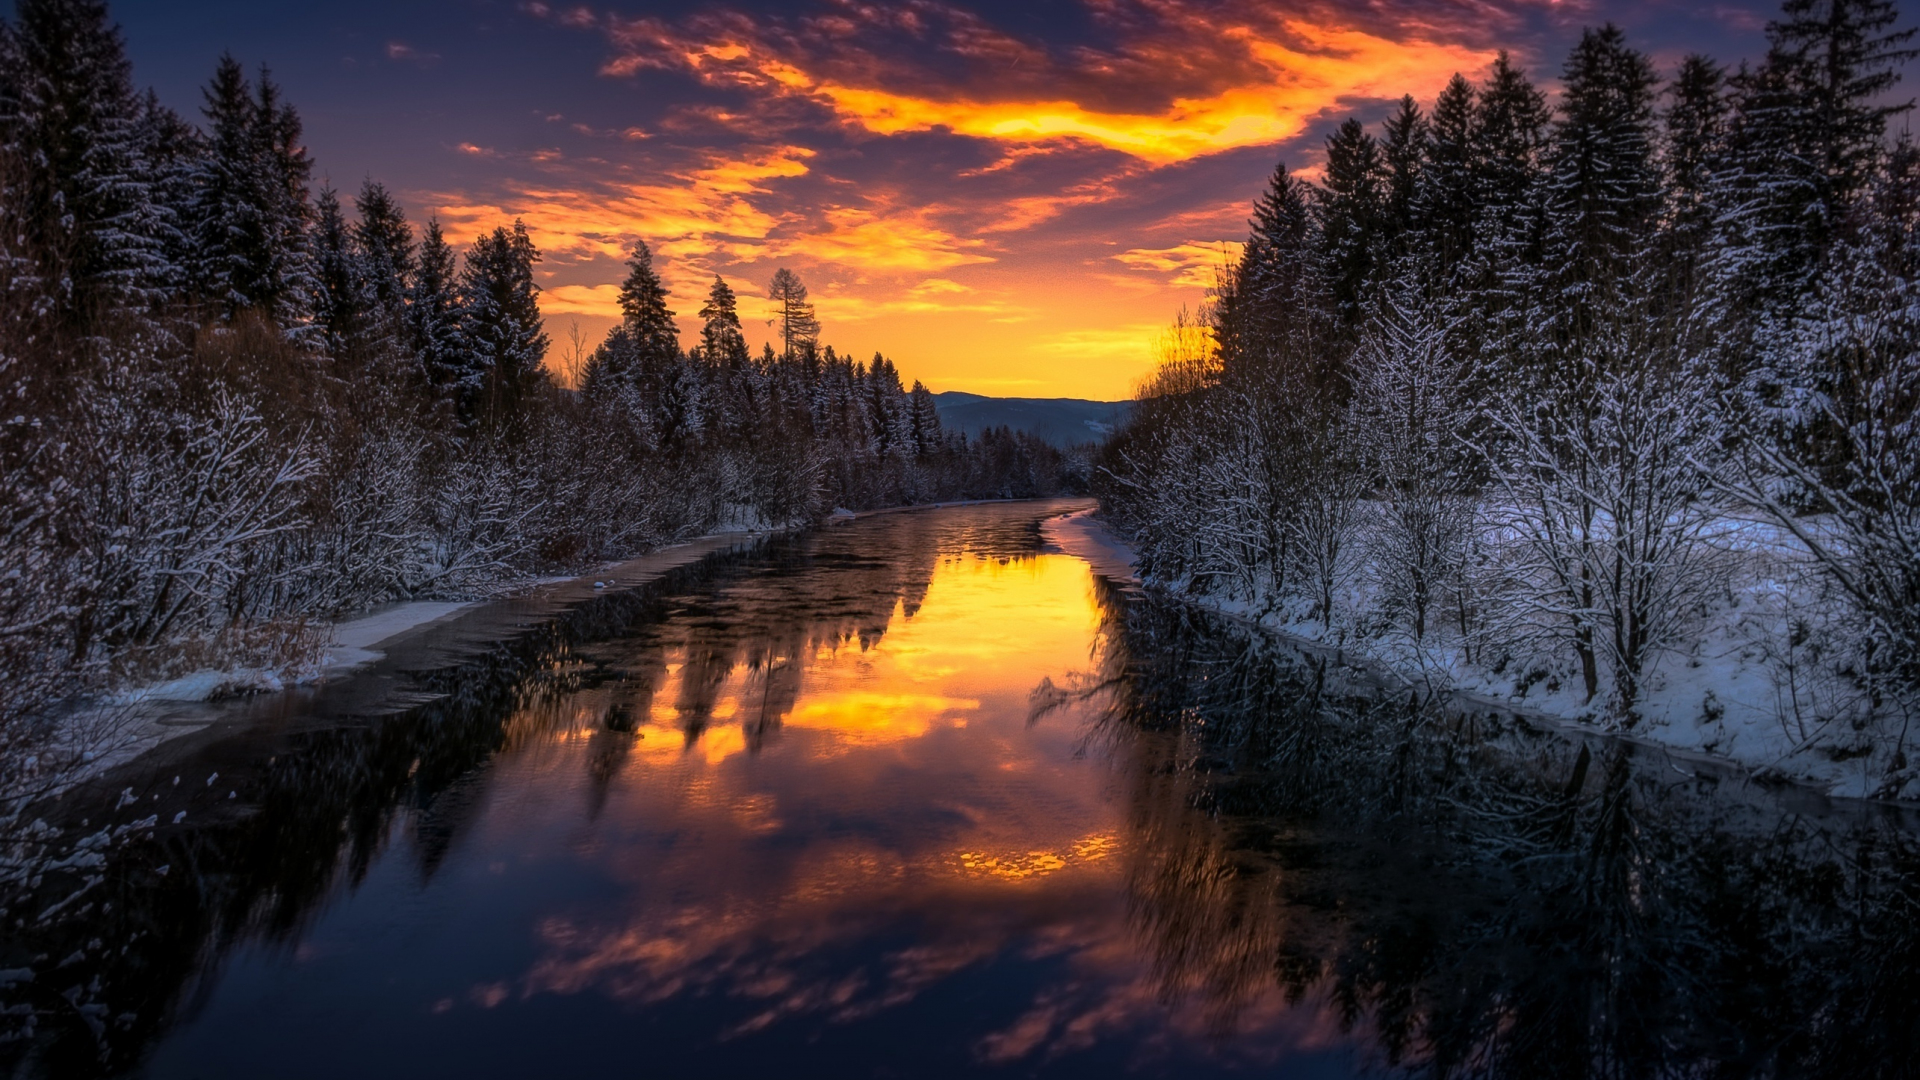 Download 1920x1080 Wallpaper River Trees Winter Sunset Nature Full